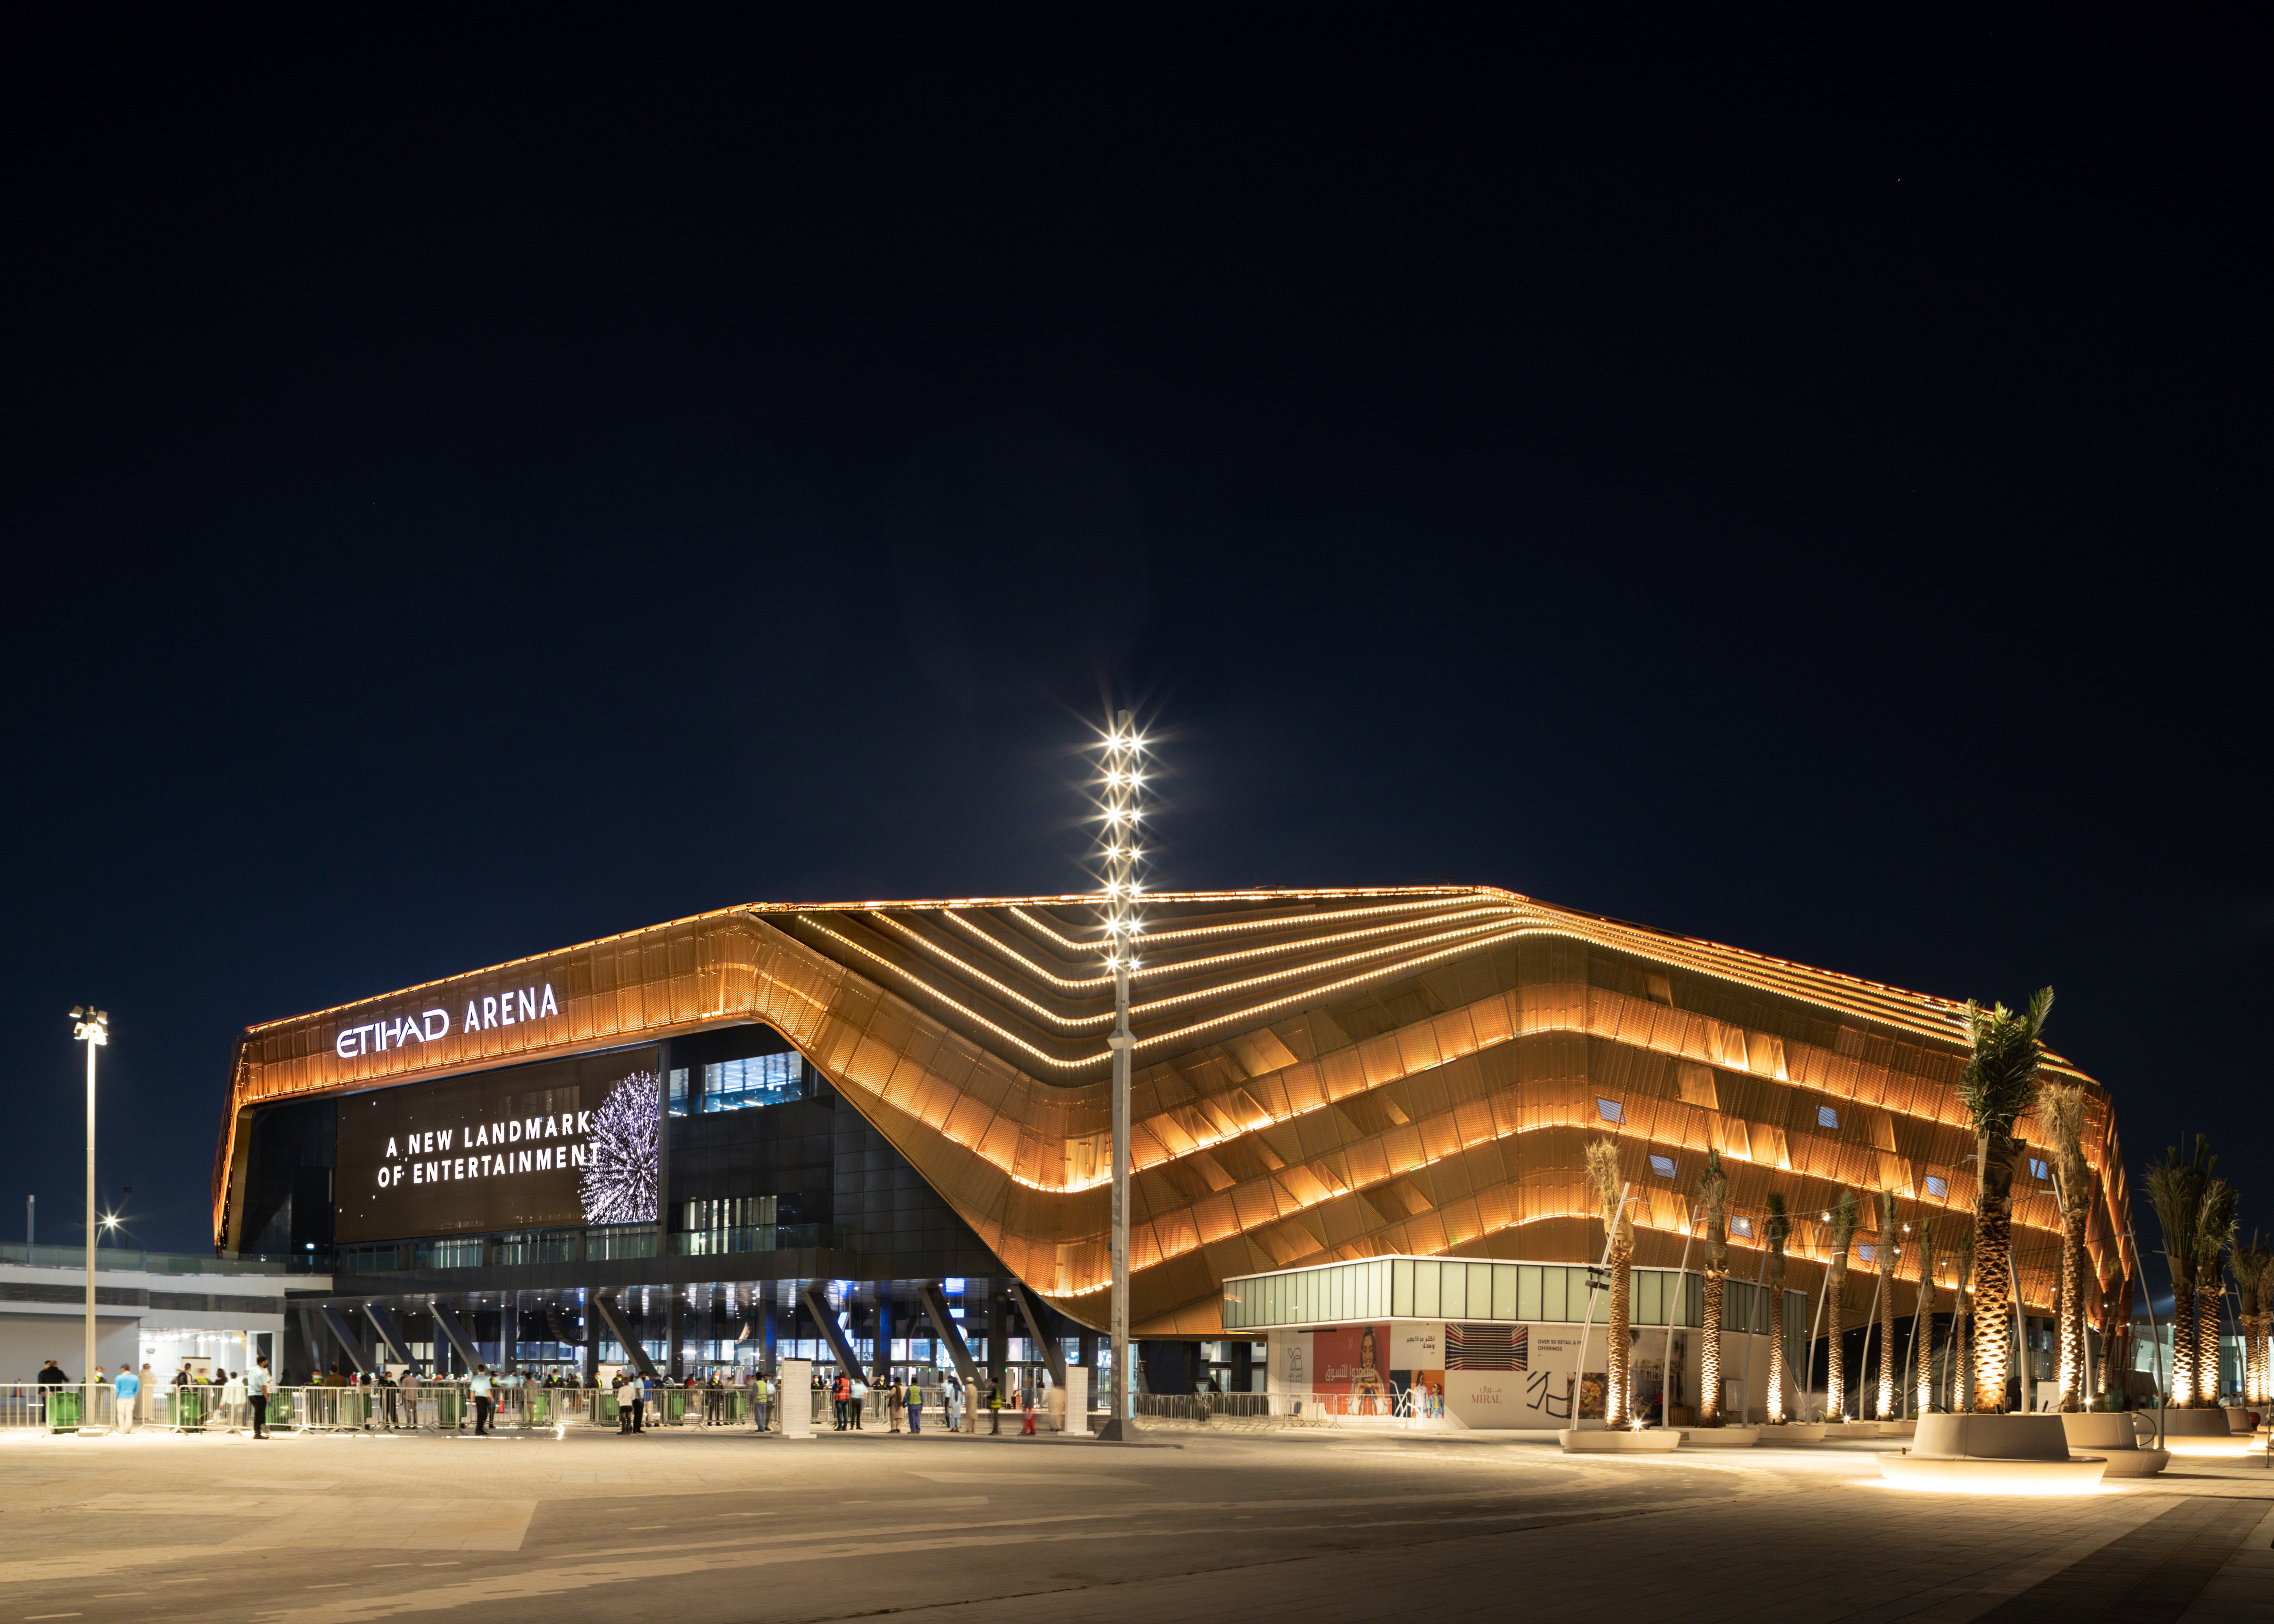 Exterior of Etihad Arena lit up at night